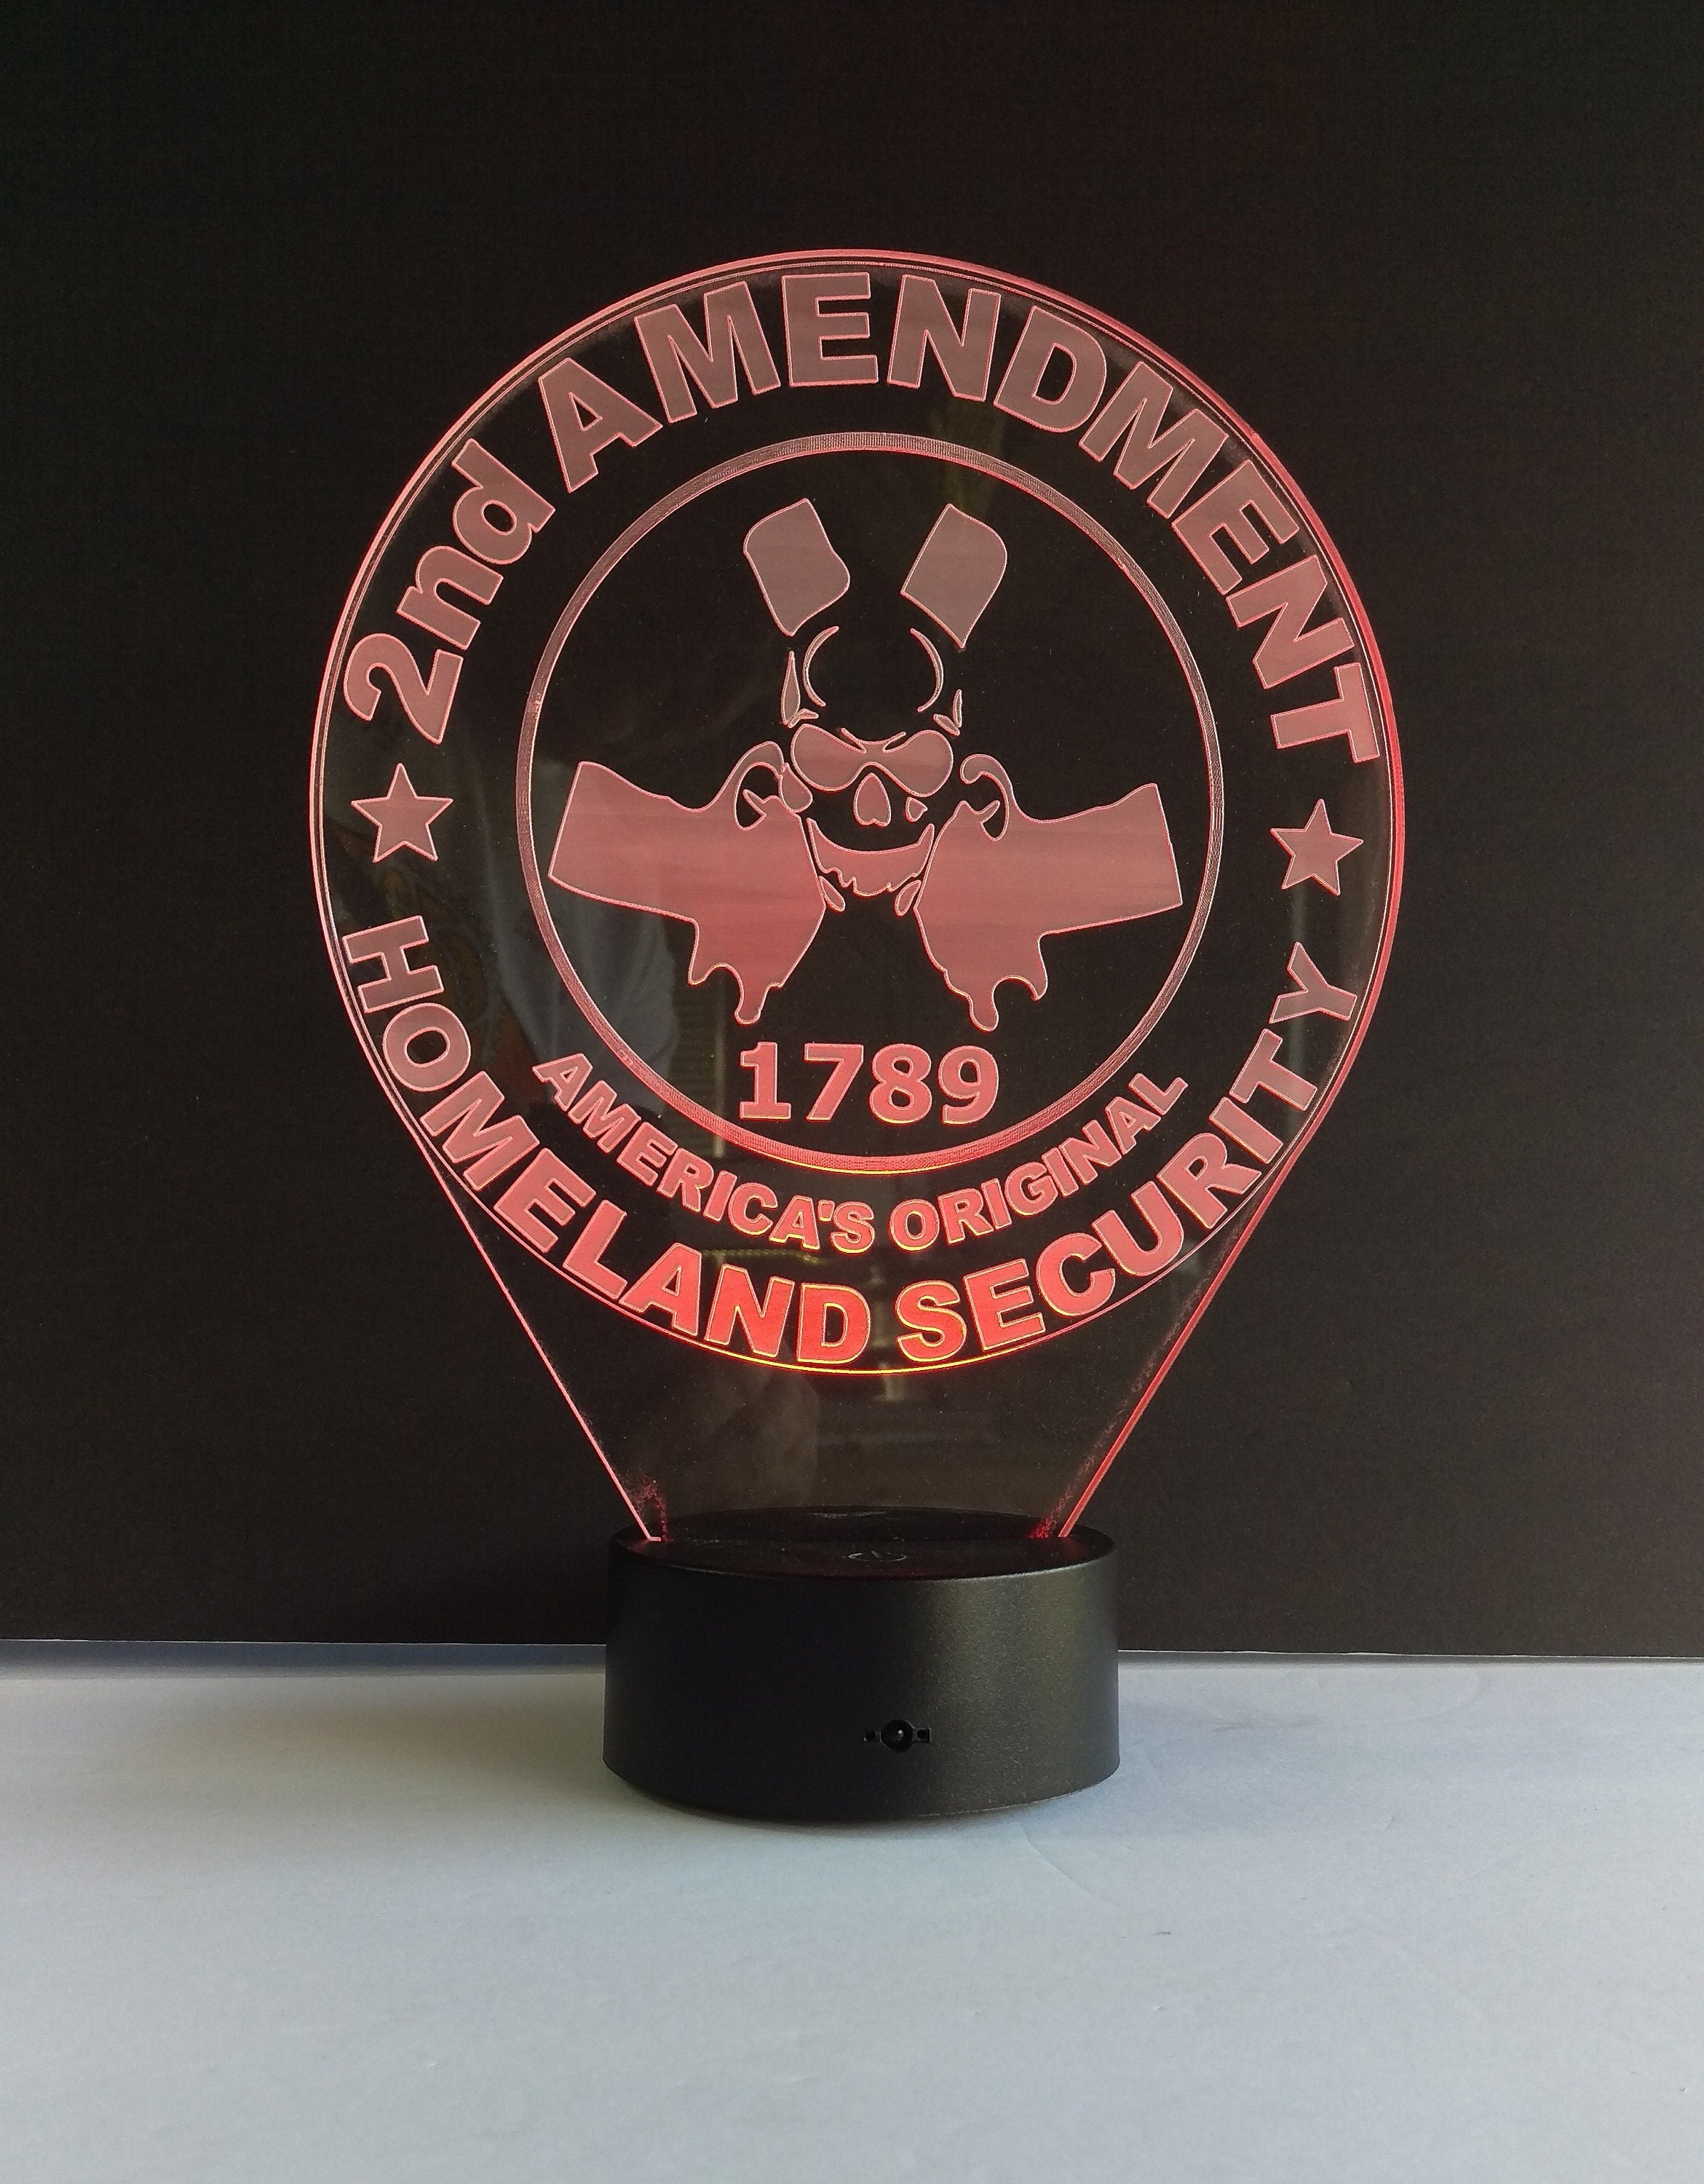 Awesome "2nd Amendment America's Original Homeland Security" LED Lamp (1158) - FREE SHIPPING!